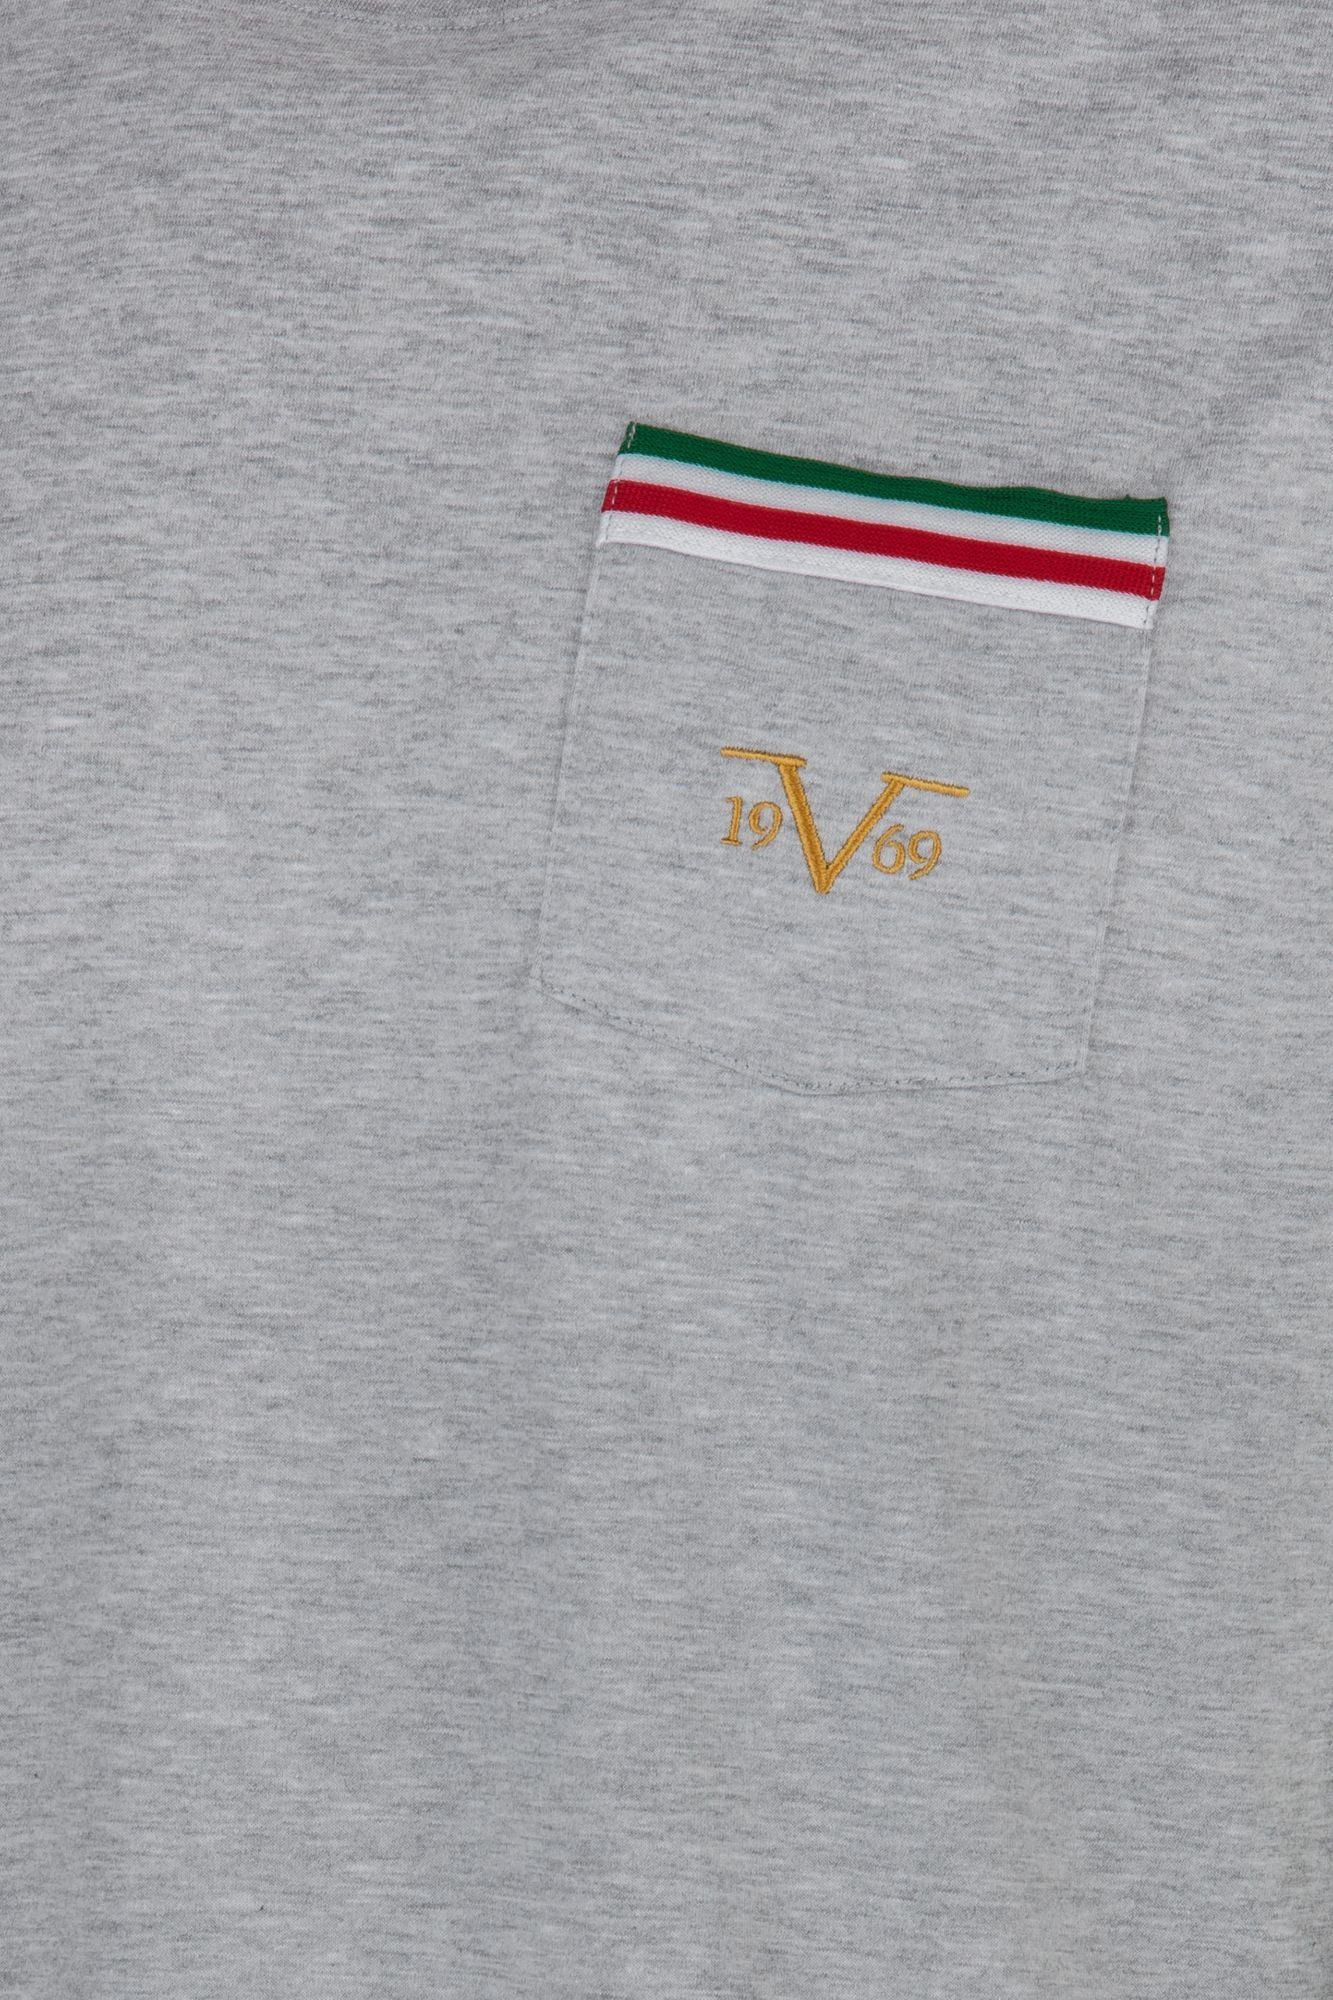 19V69 by mit Tasche Federico-031 Versace T-Shirt Italia